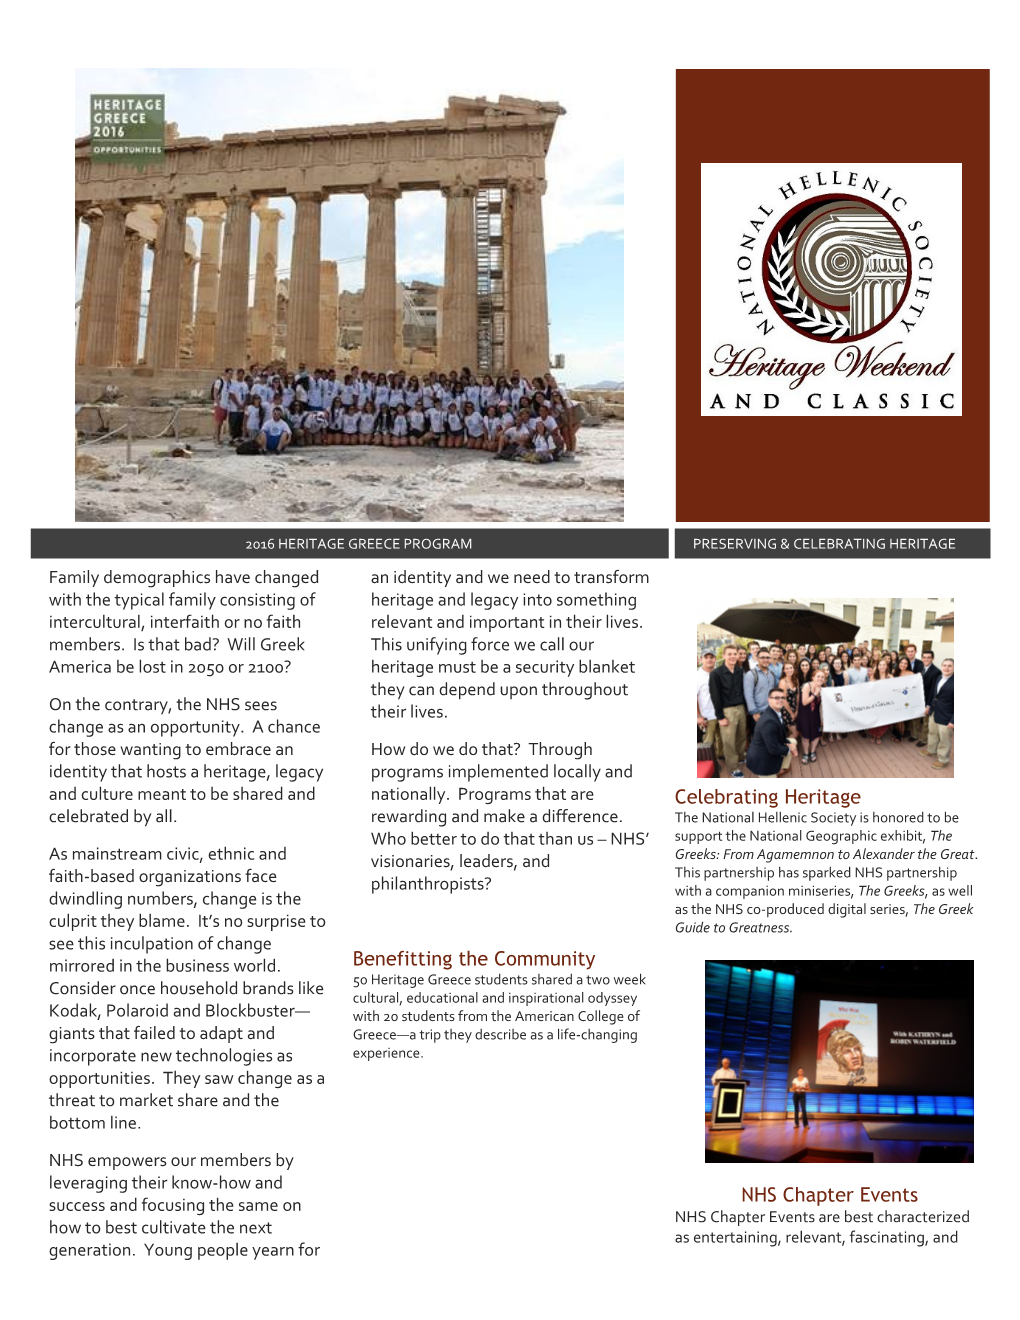 2016 Heritage Greece Program